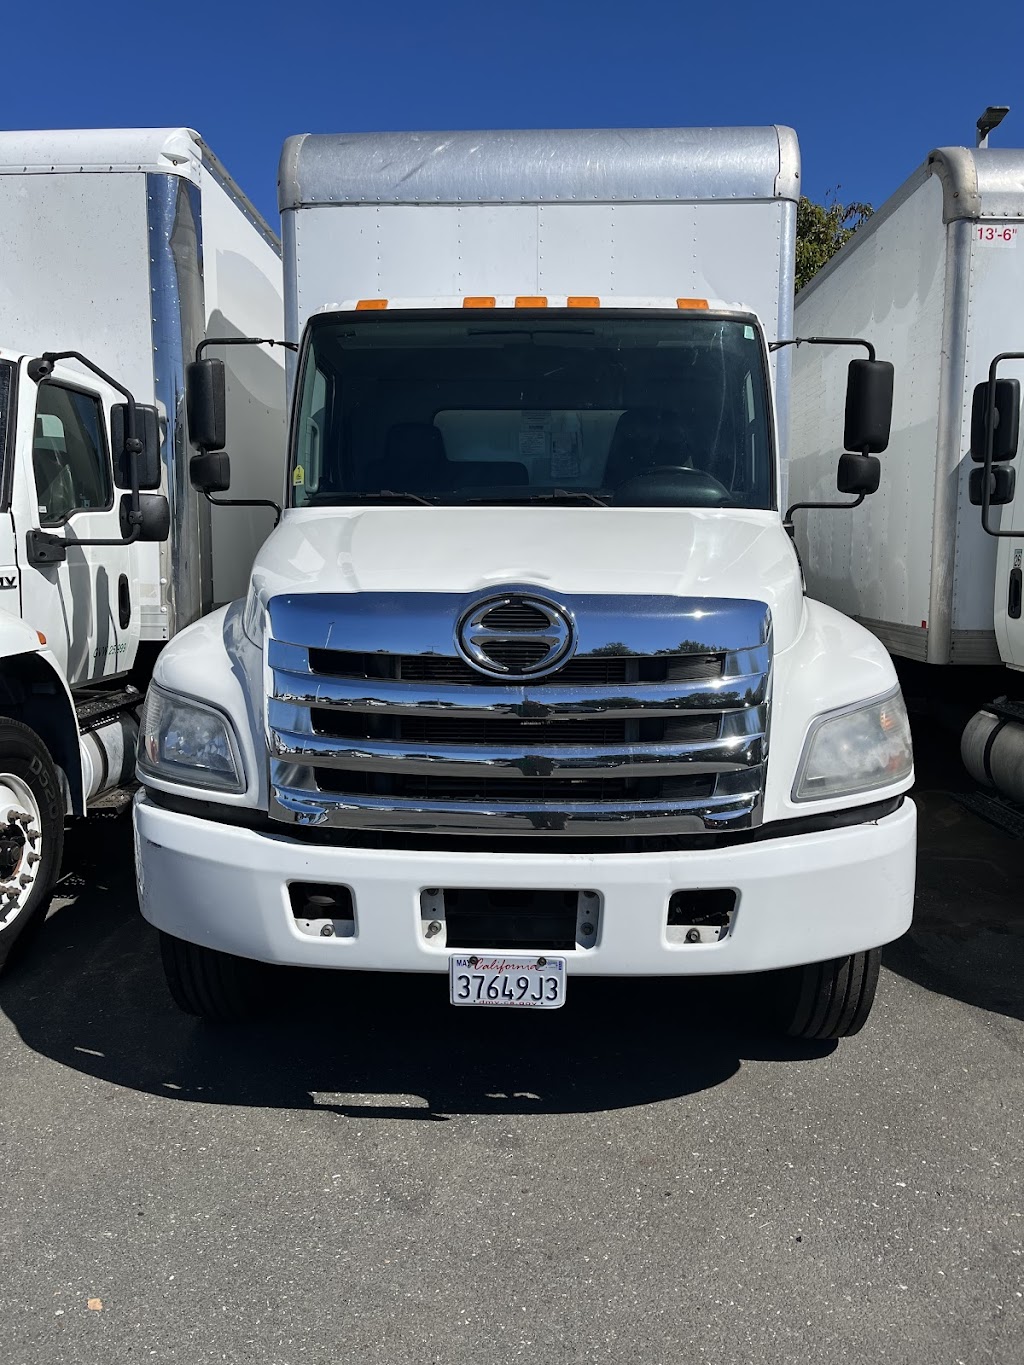 Enterprise Truck Sales | 575 Marina Blvd, San Leandro, CA 94577 | Phone: (510) 564-0883